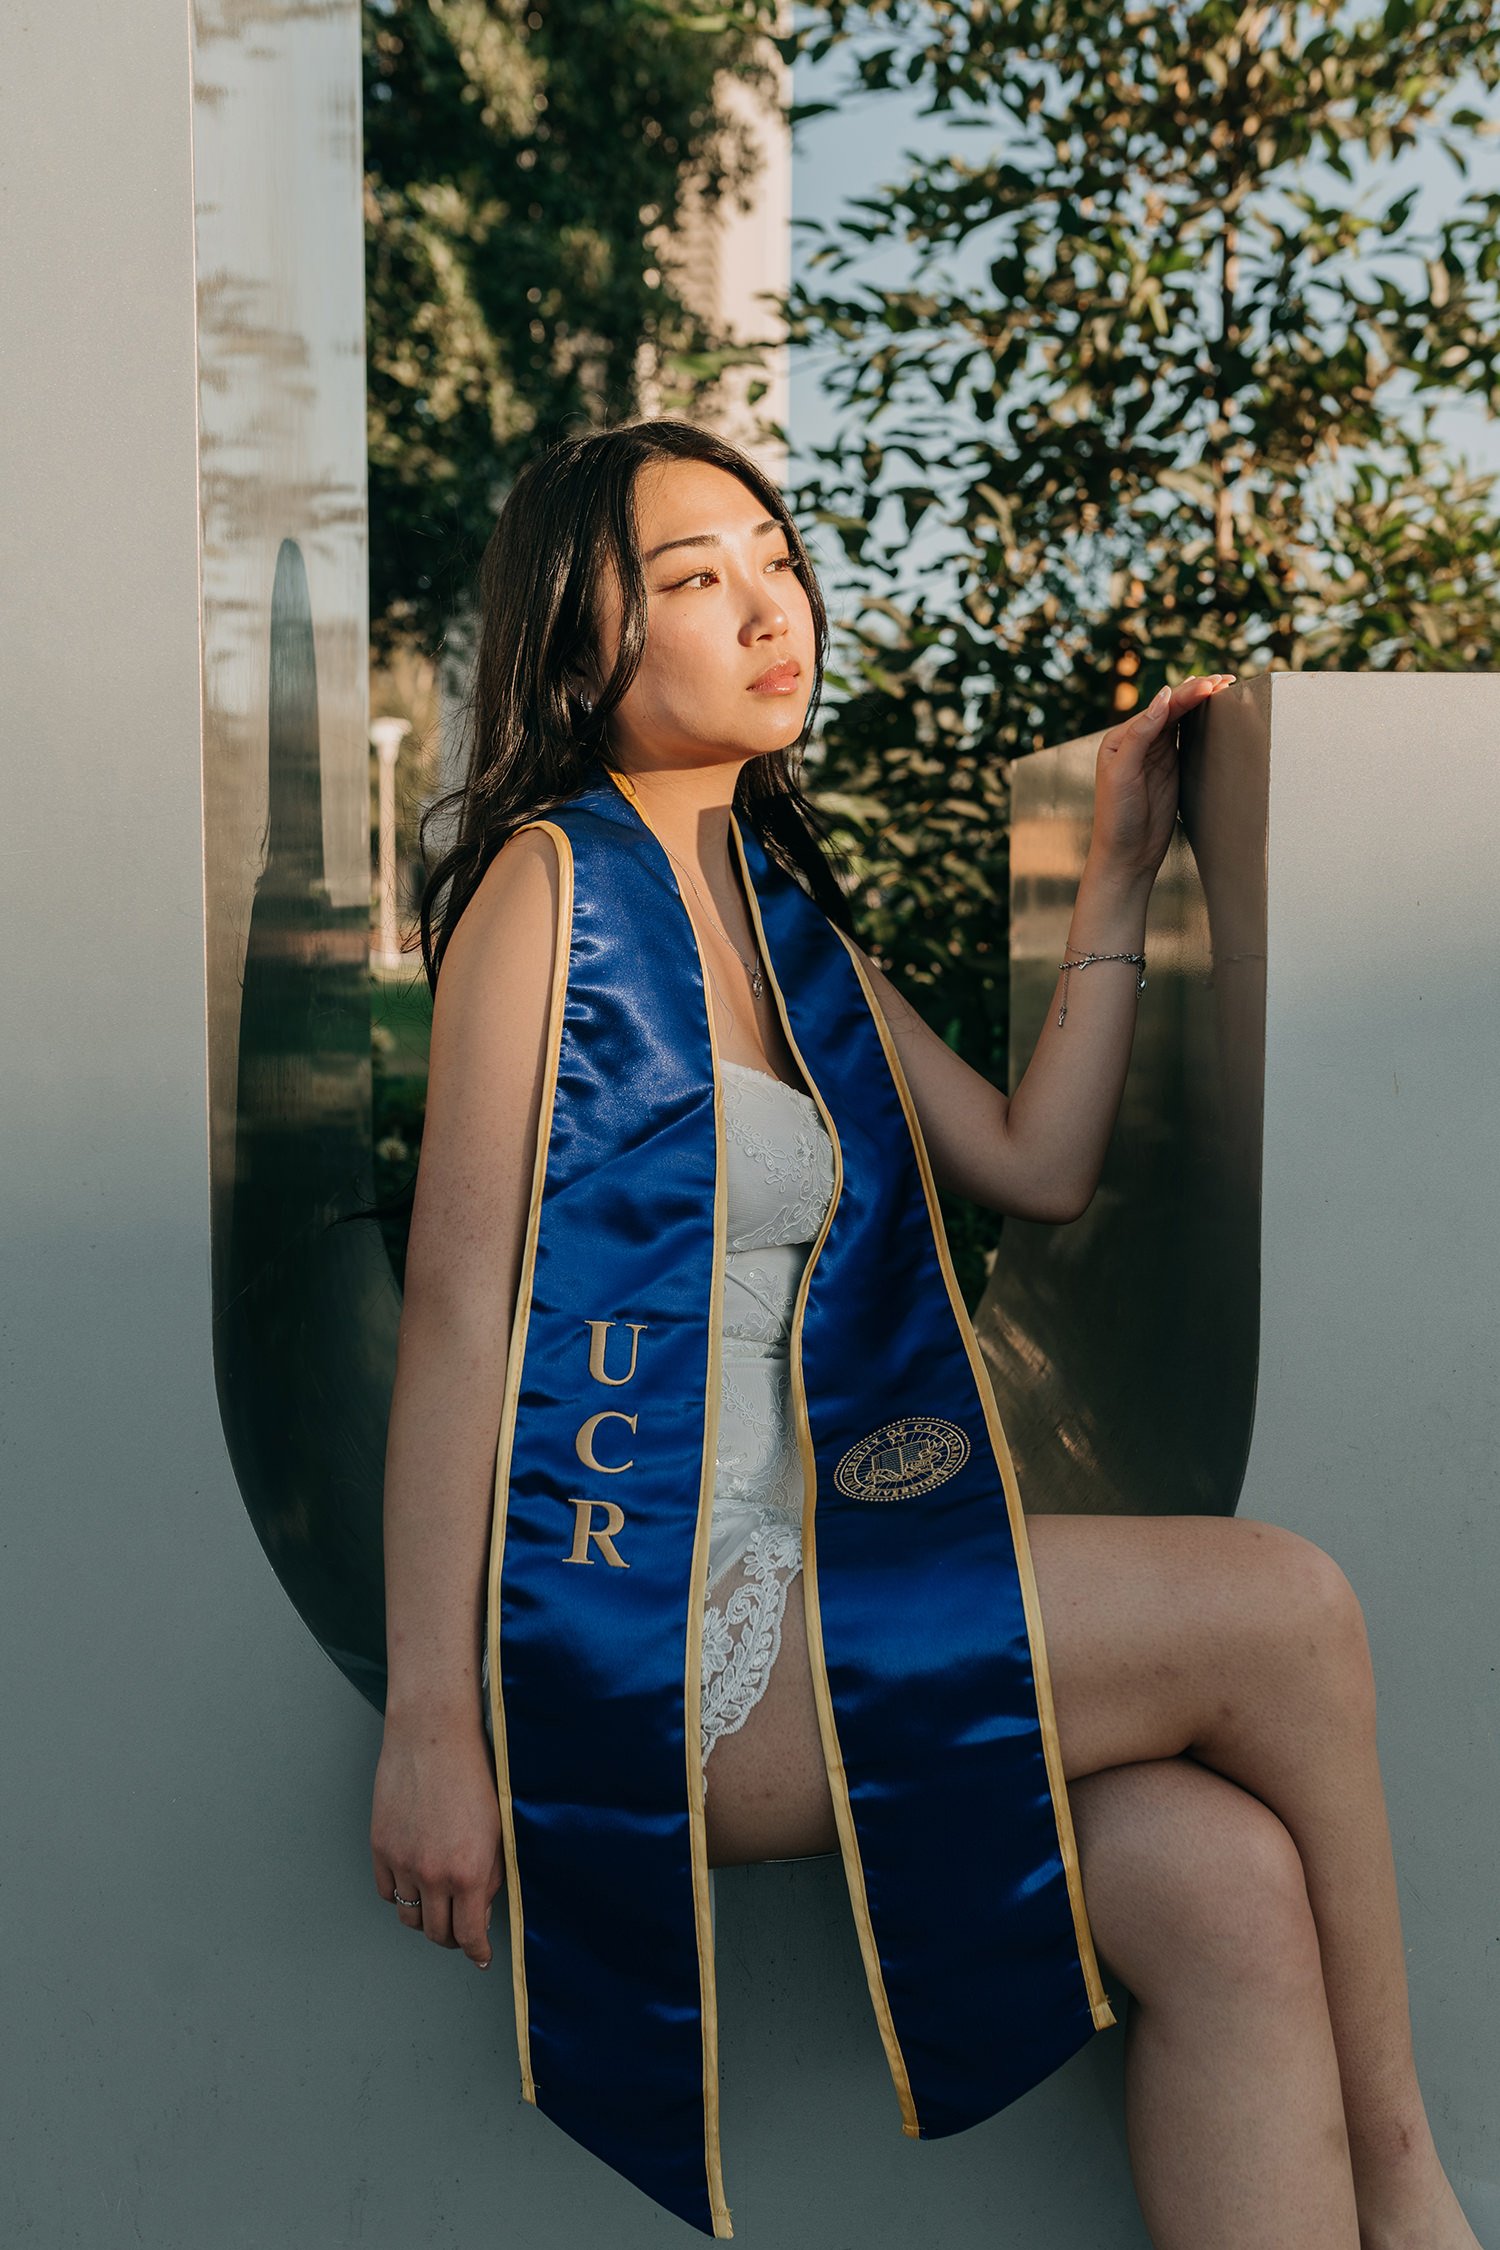 ucr-graduation-portrait-riverside-california-photographer-16.jpg